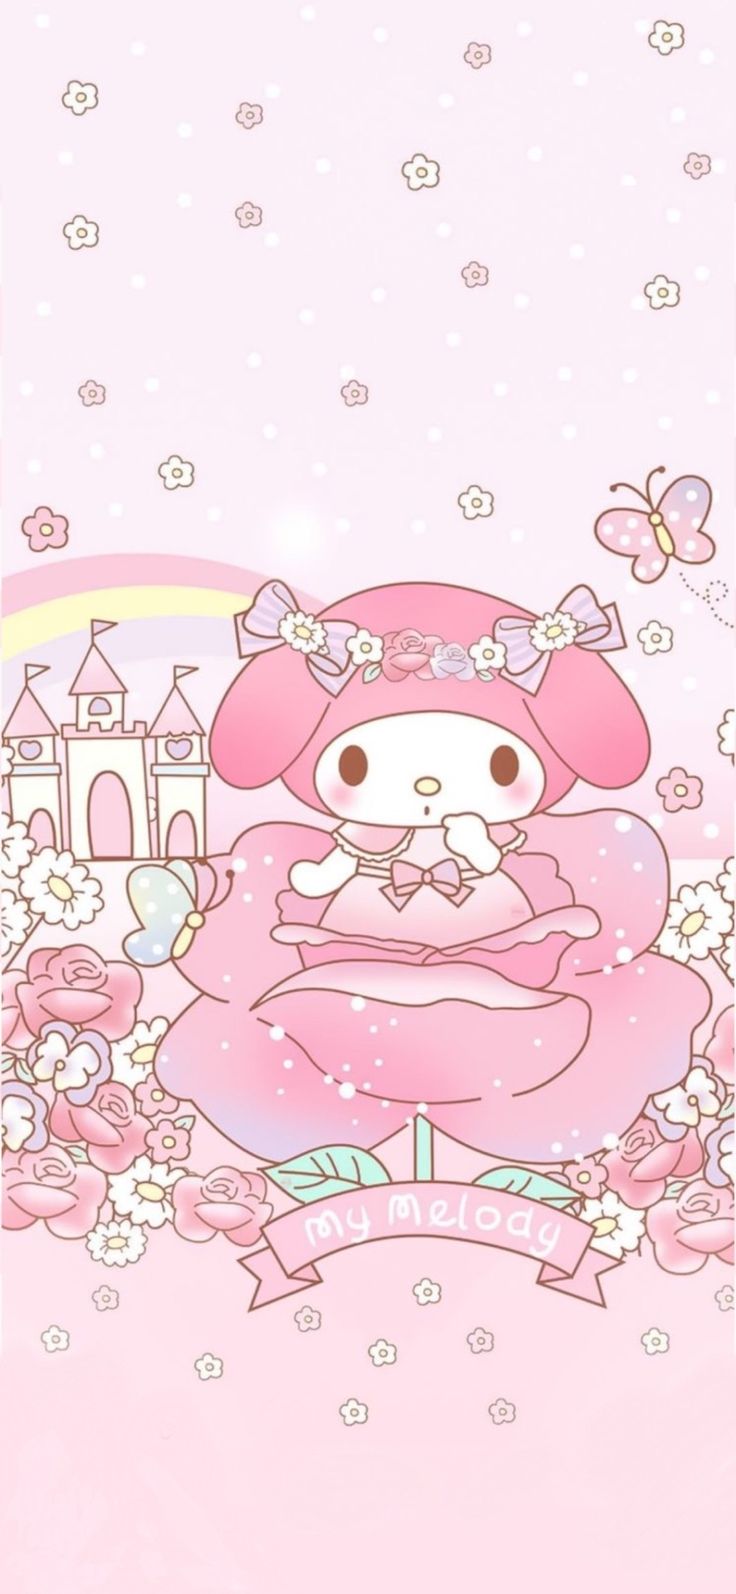 Kawaii wallpaper page. Hello kitty iphone wallpaper, Kawaii wallpaper, My melody wallpaper